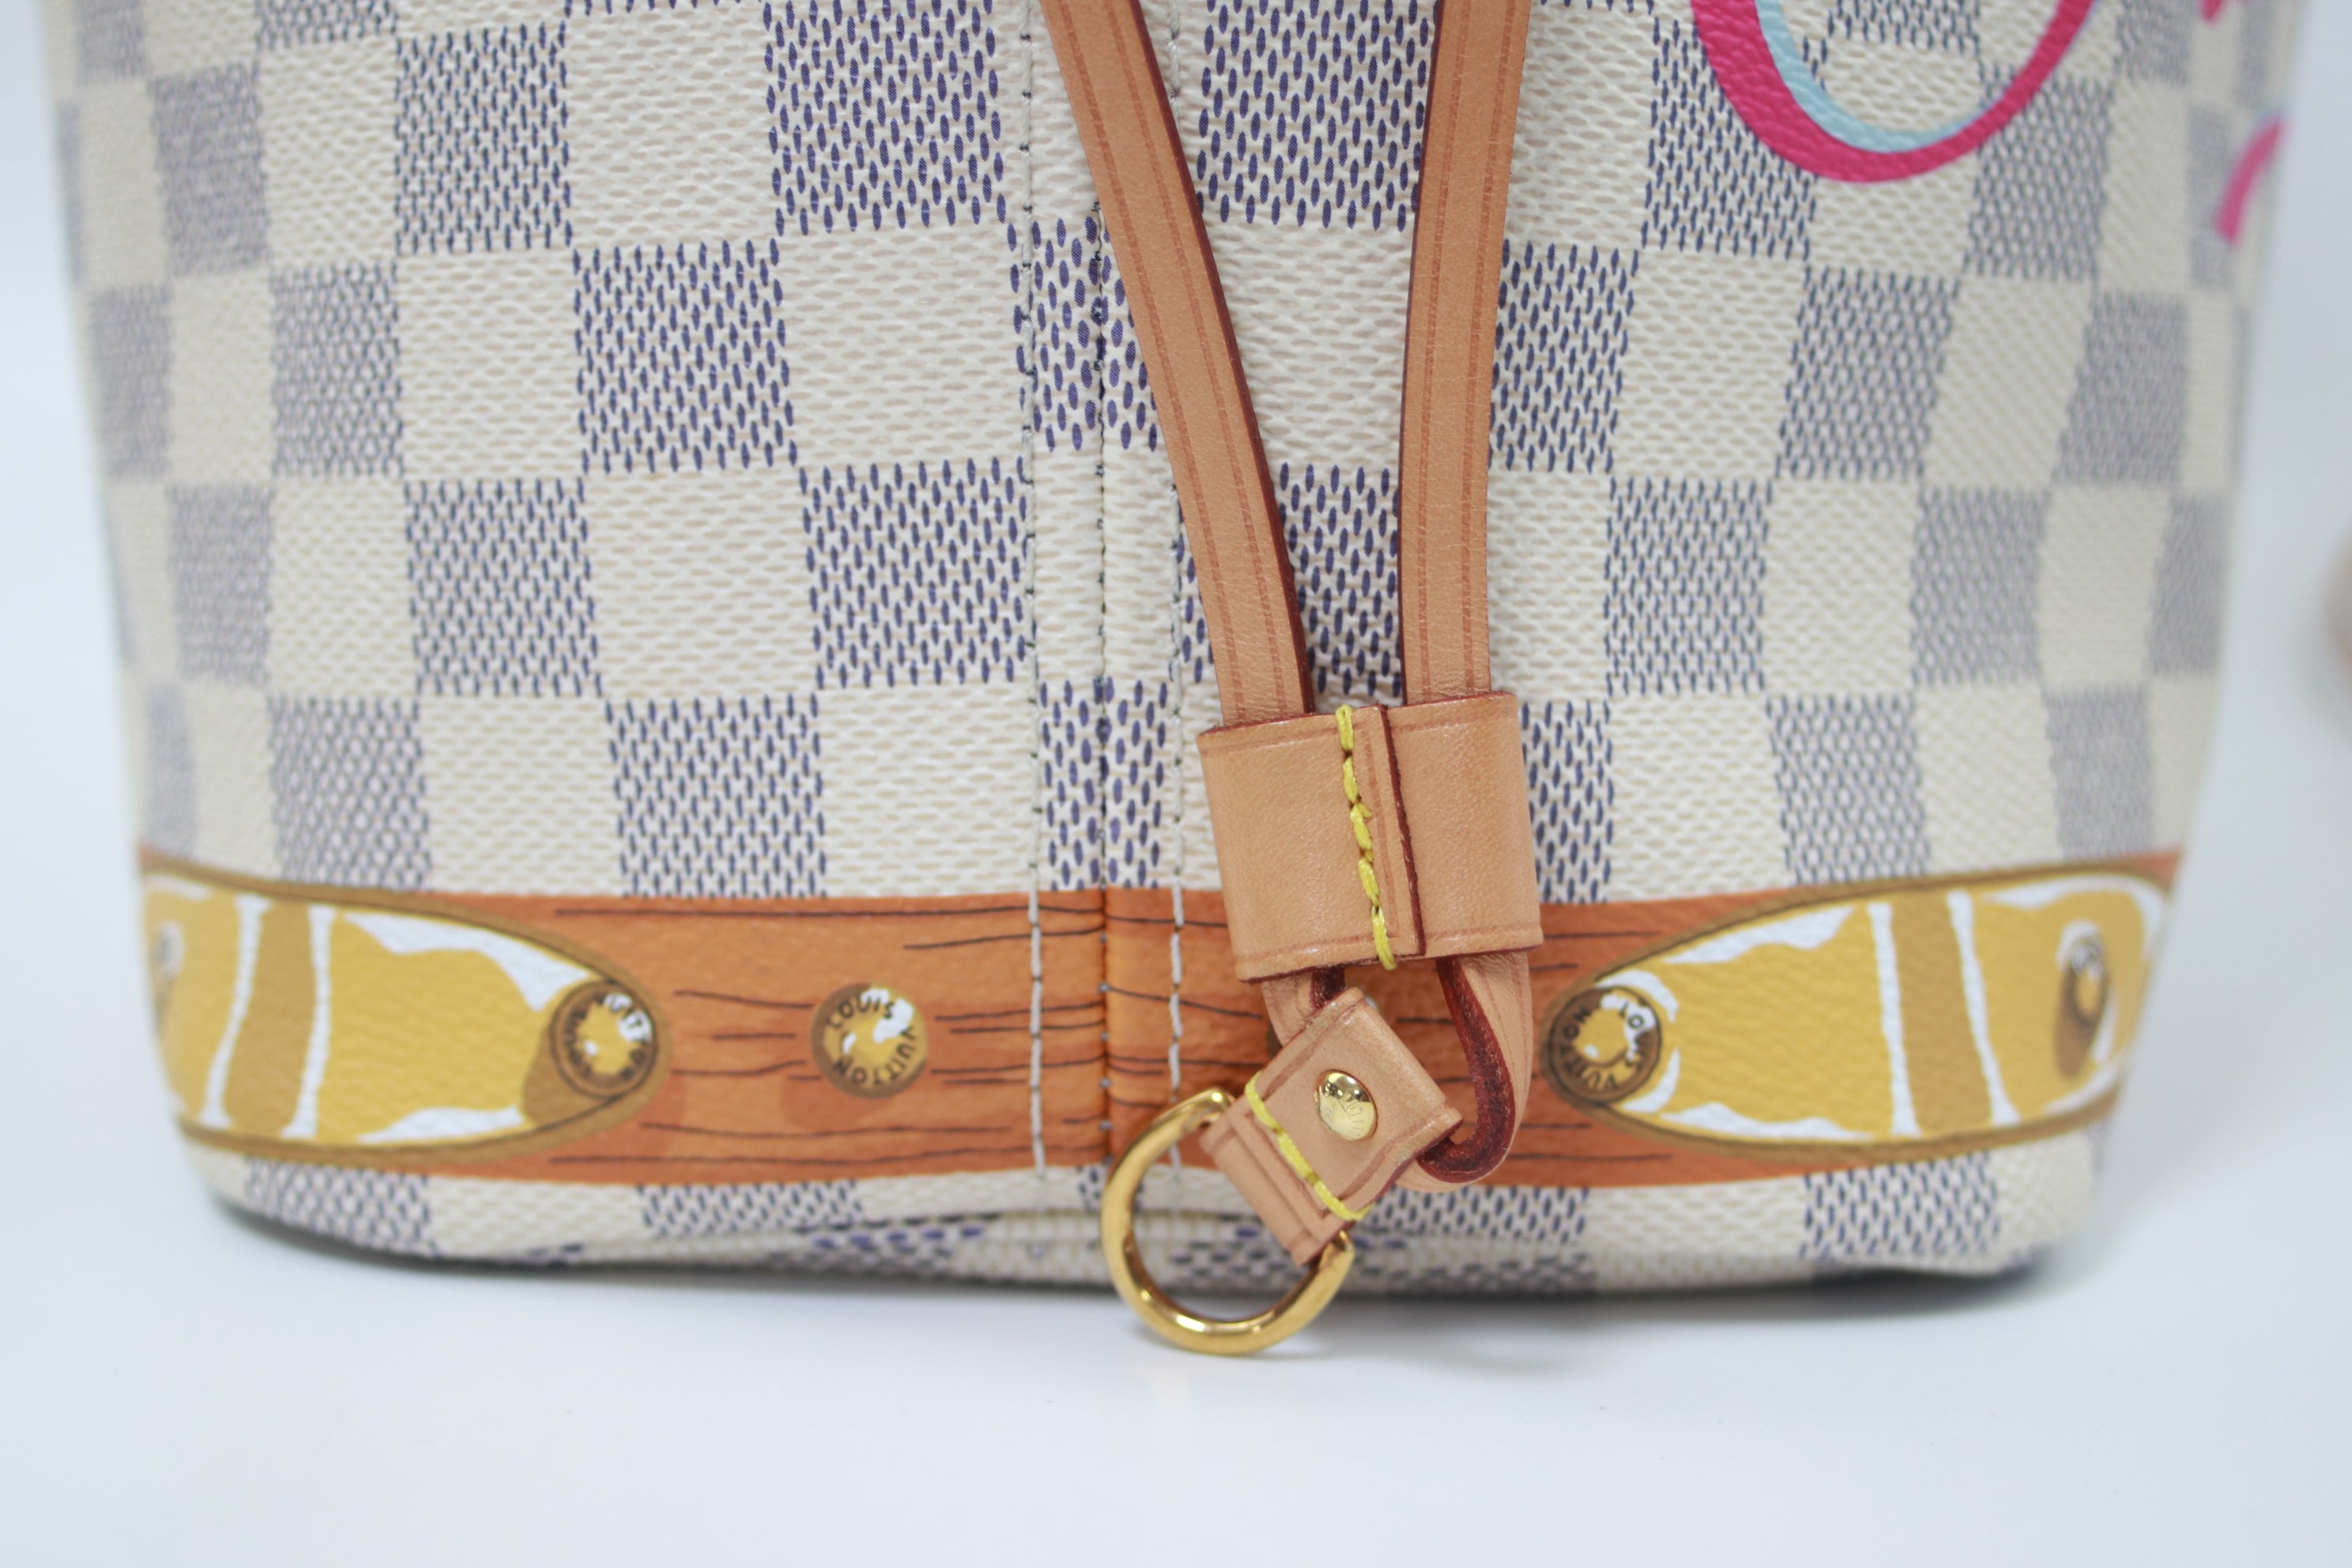 Original Louis Vuitton NEVERFULL MM Limited Edition Ladies Handbag  "CEEE"******